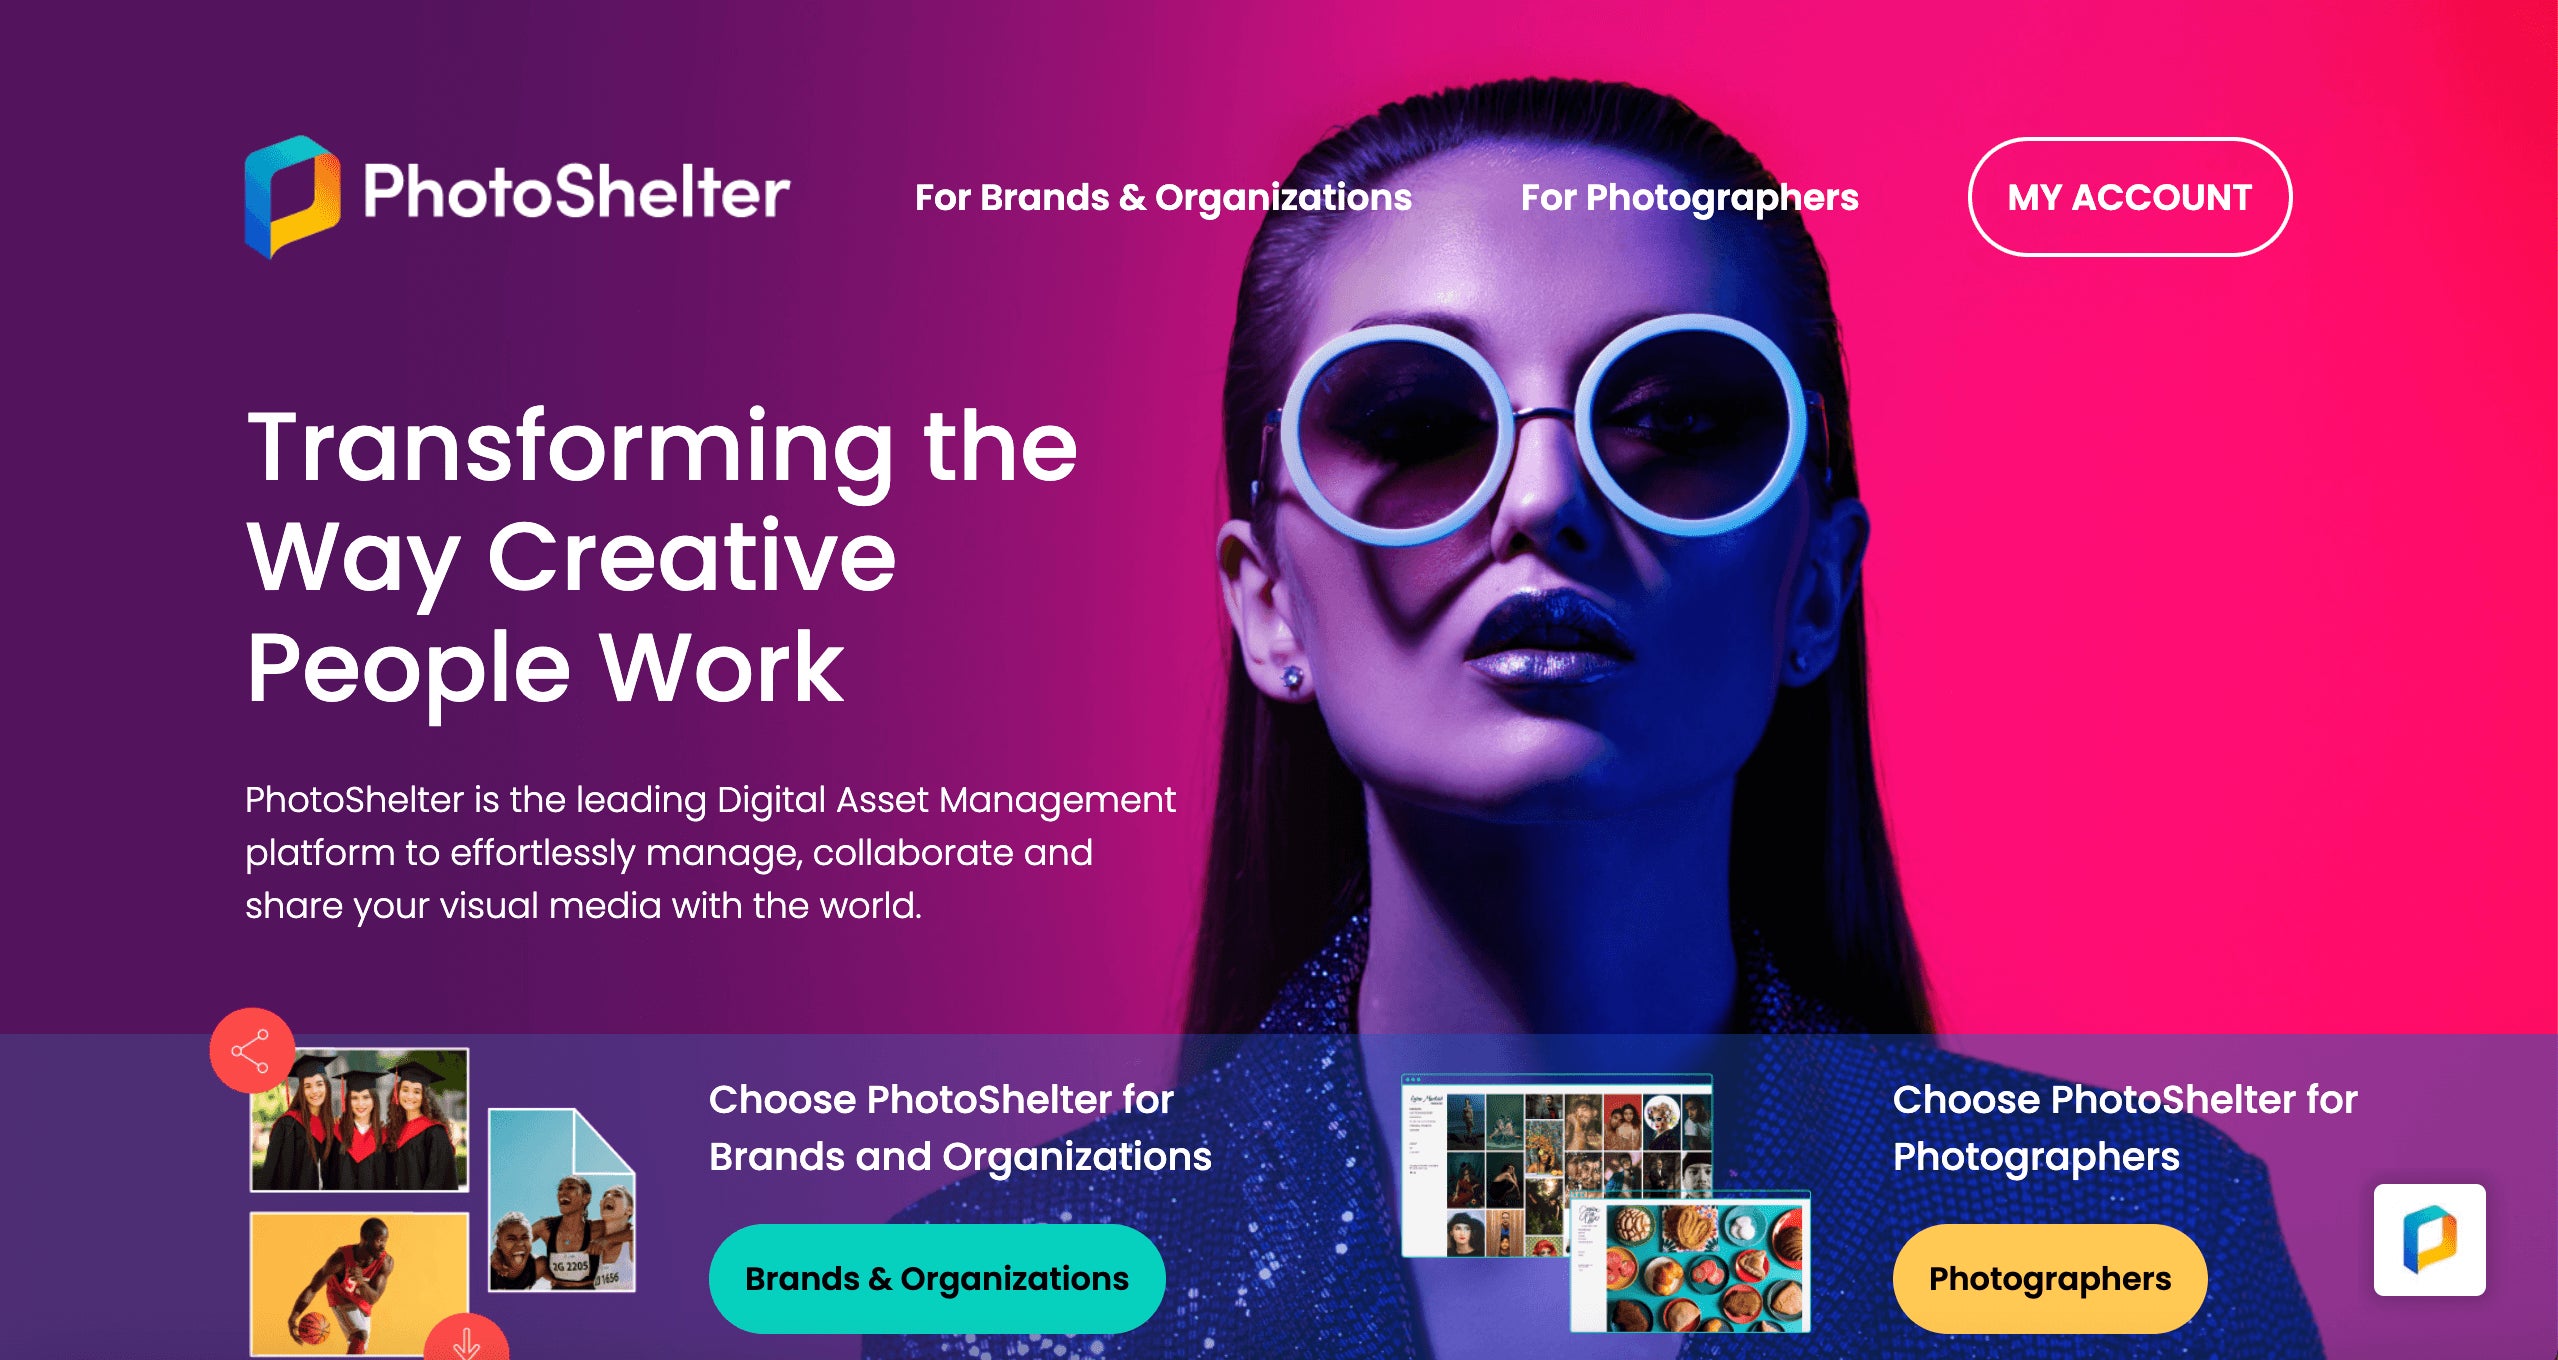 PhotoShelter homepage